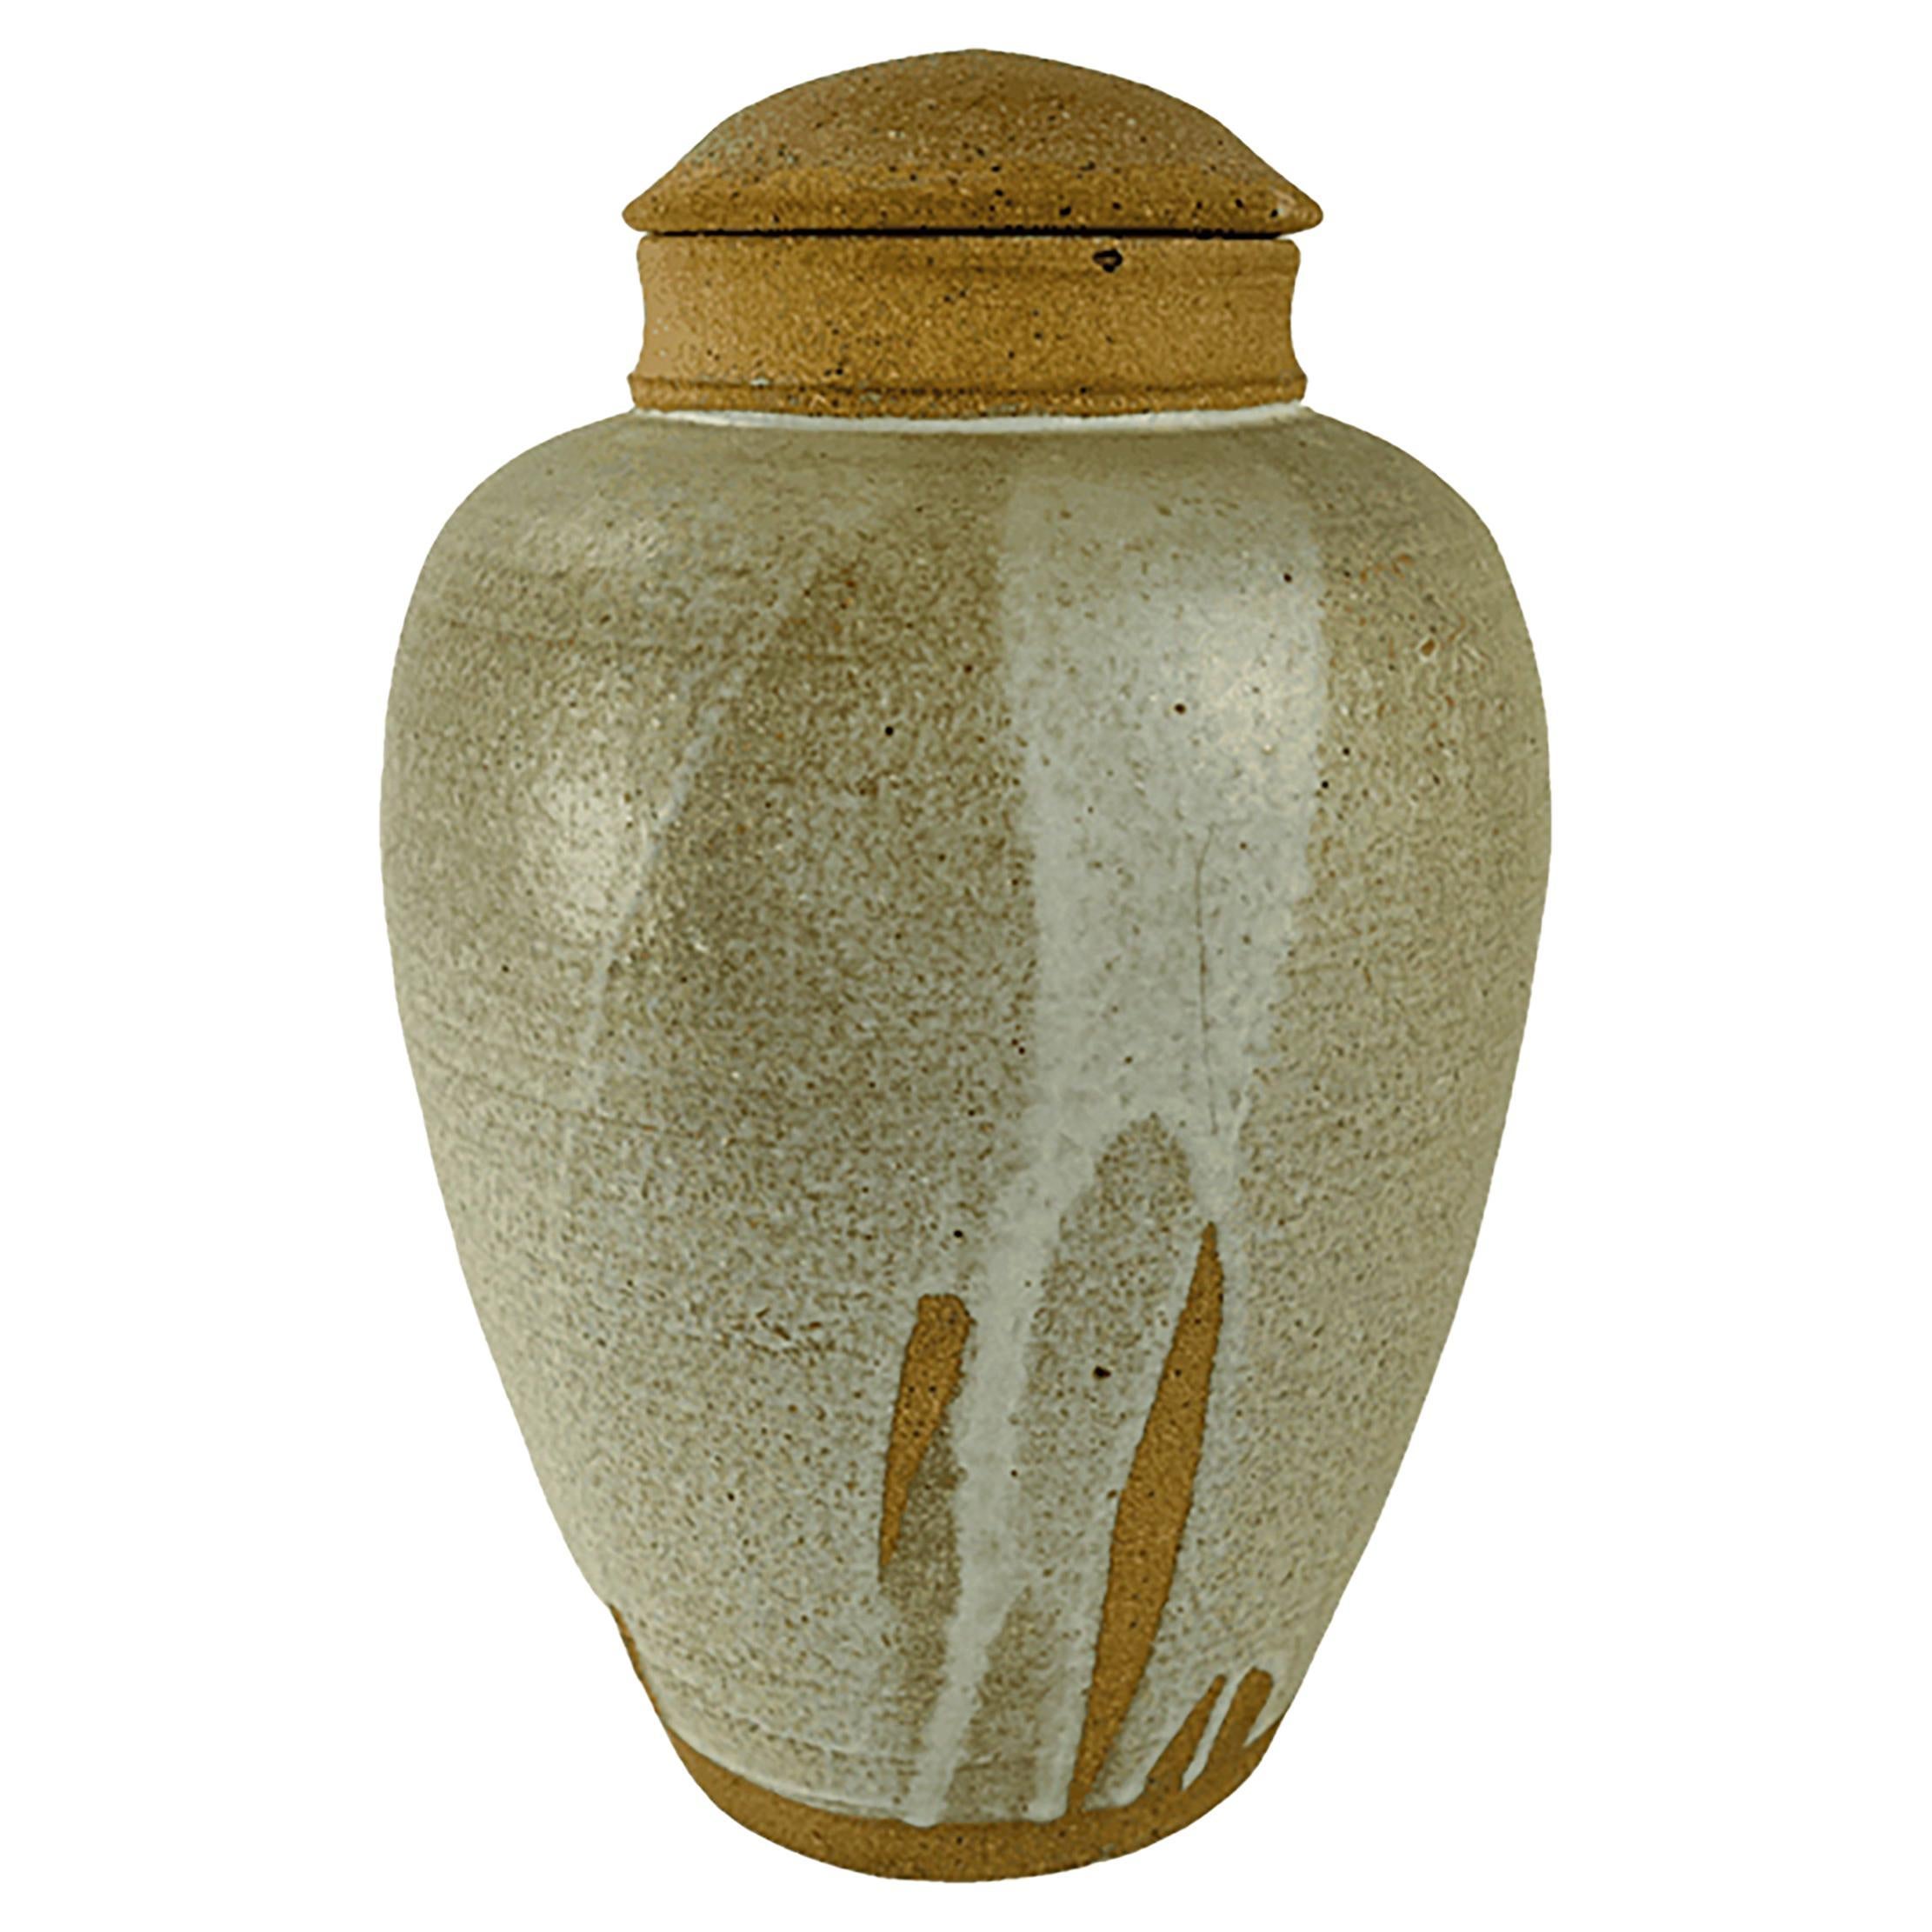 Mid 20th century hand turned clay lidded jar with a lava glazed finish